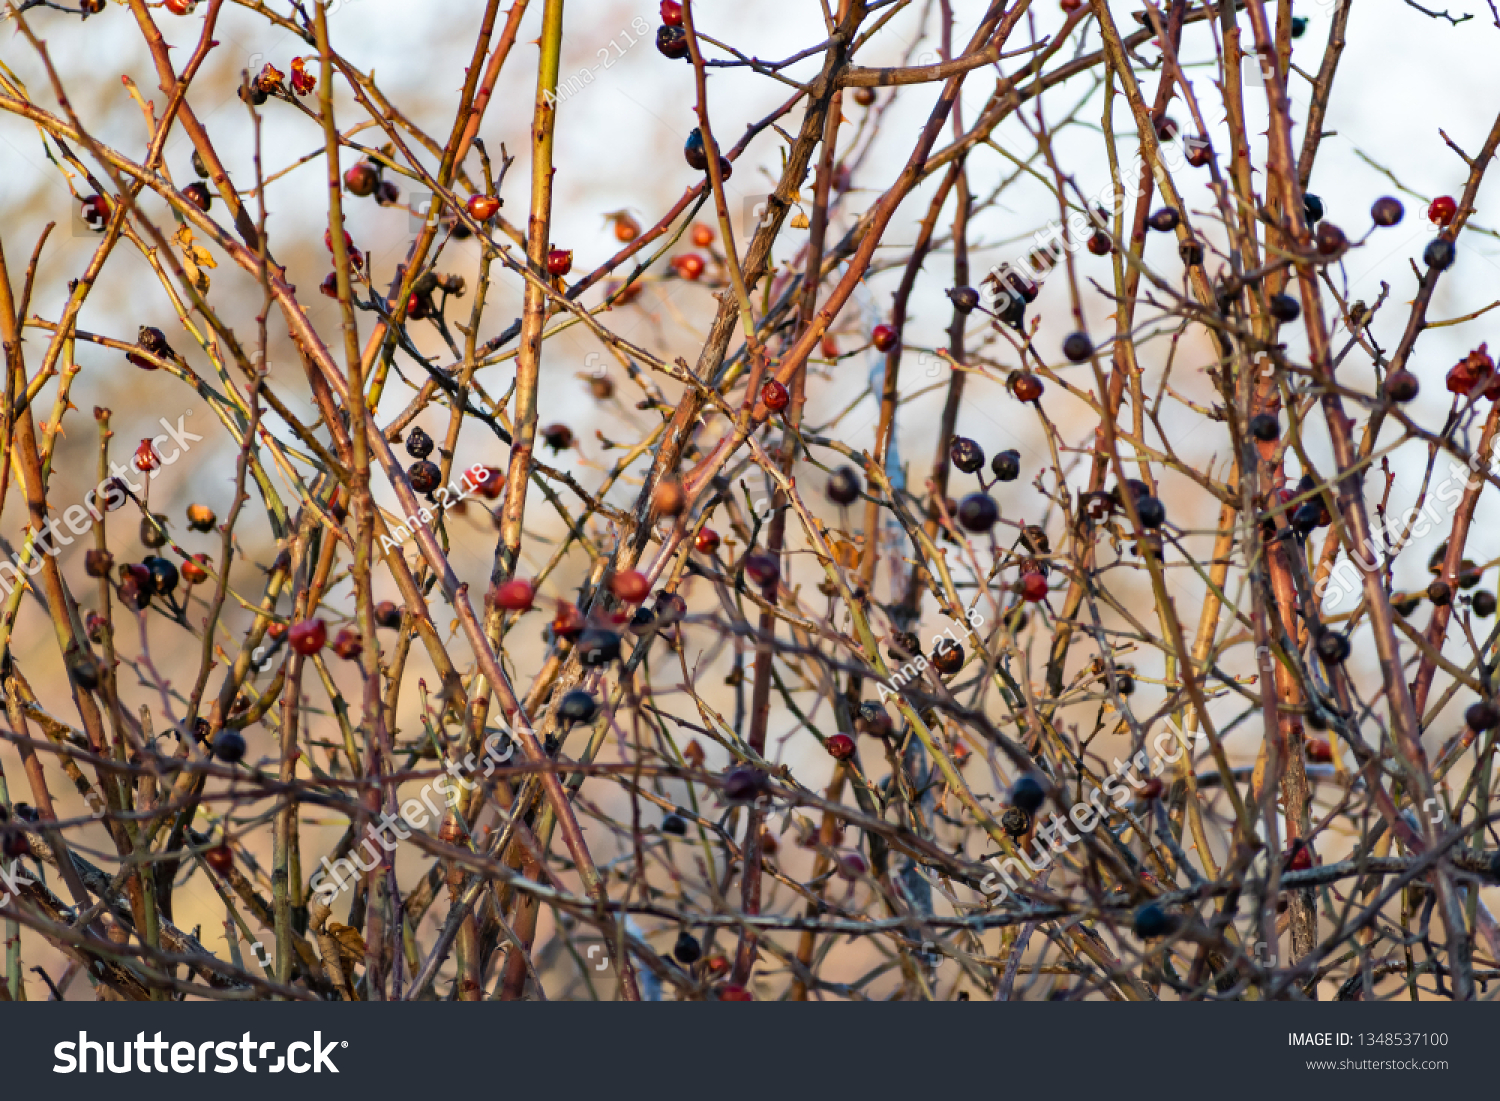 Image of Wild rose bush in winter